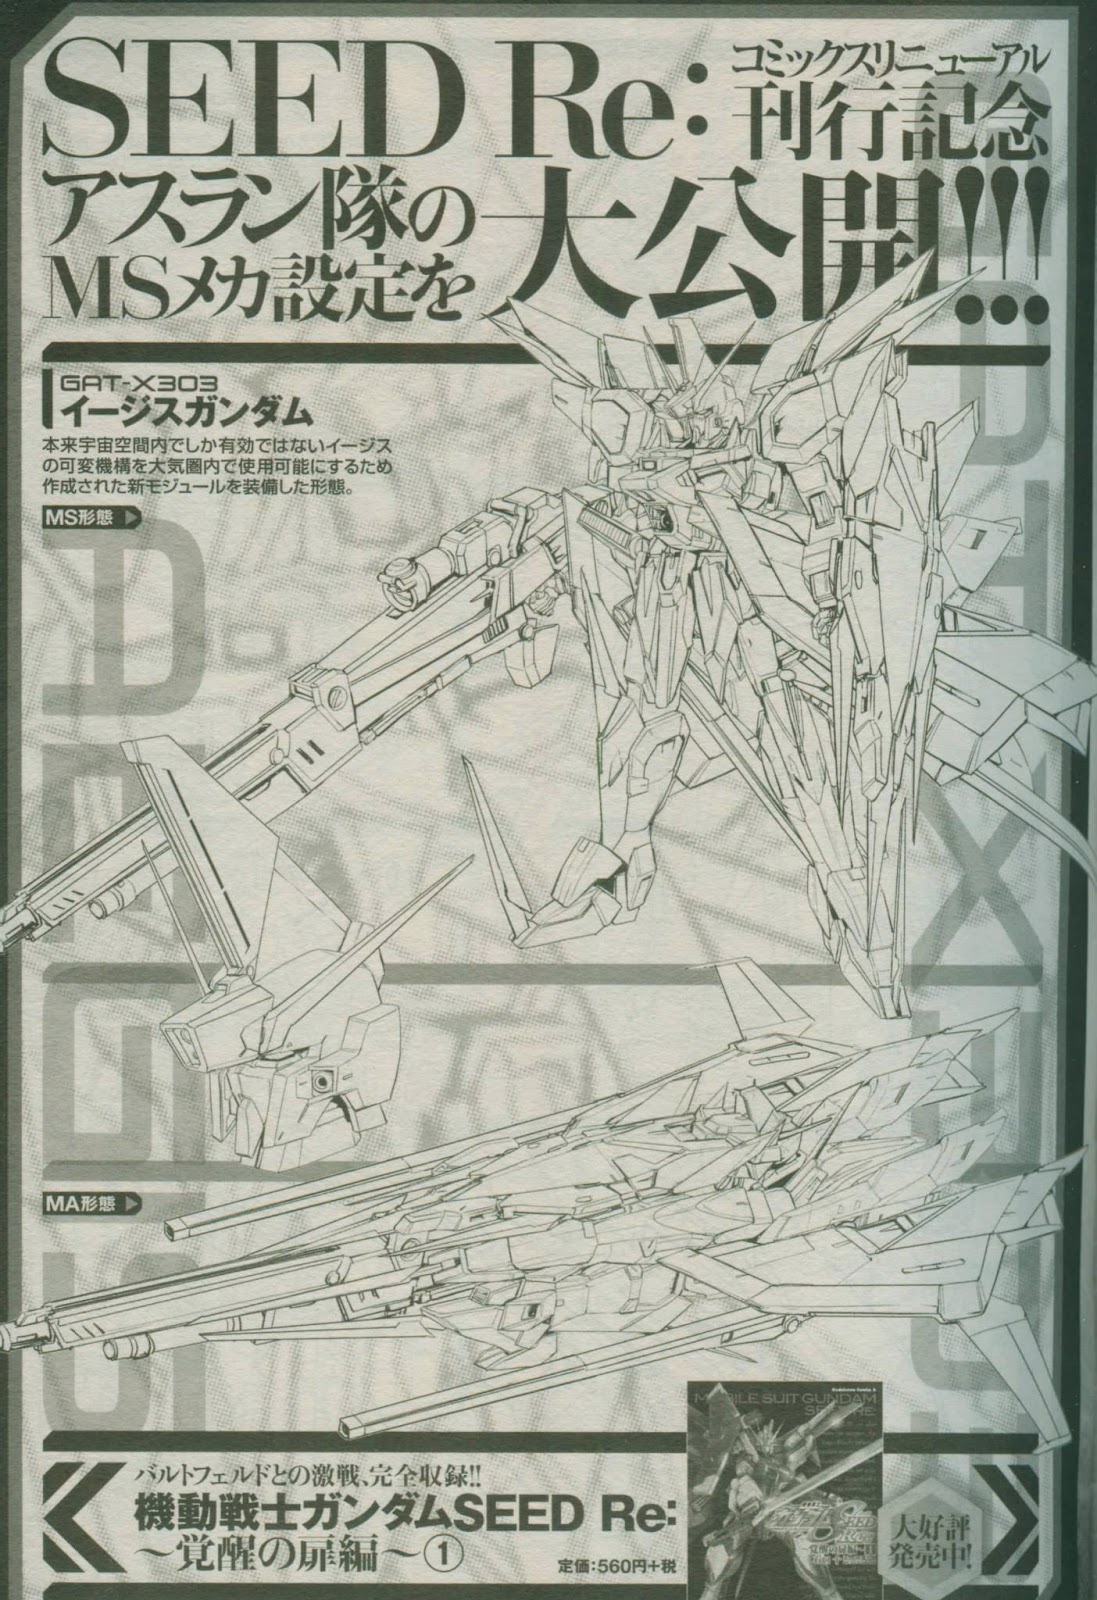 Gundam SEED Re: MS Mechanic Files - Gundam Kits Collection News and Reviews1097 x 1600